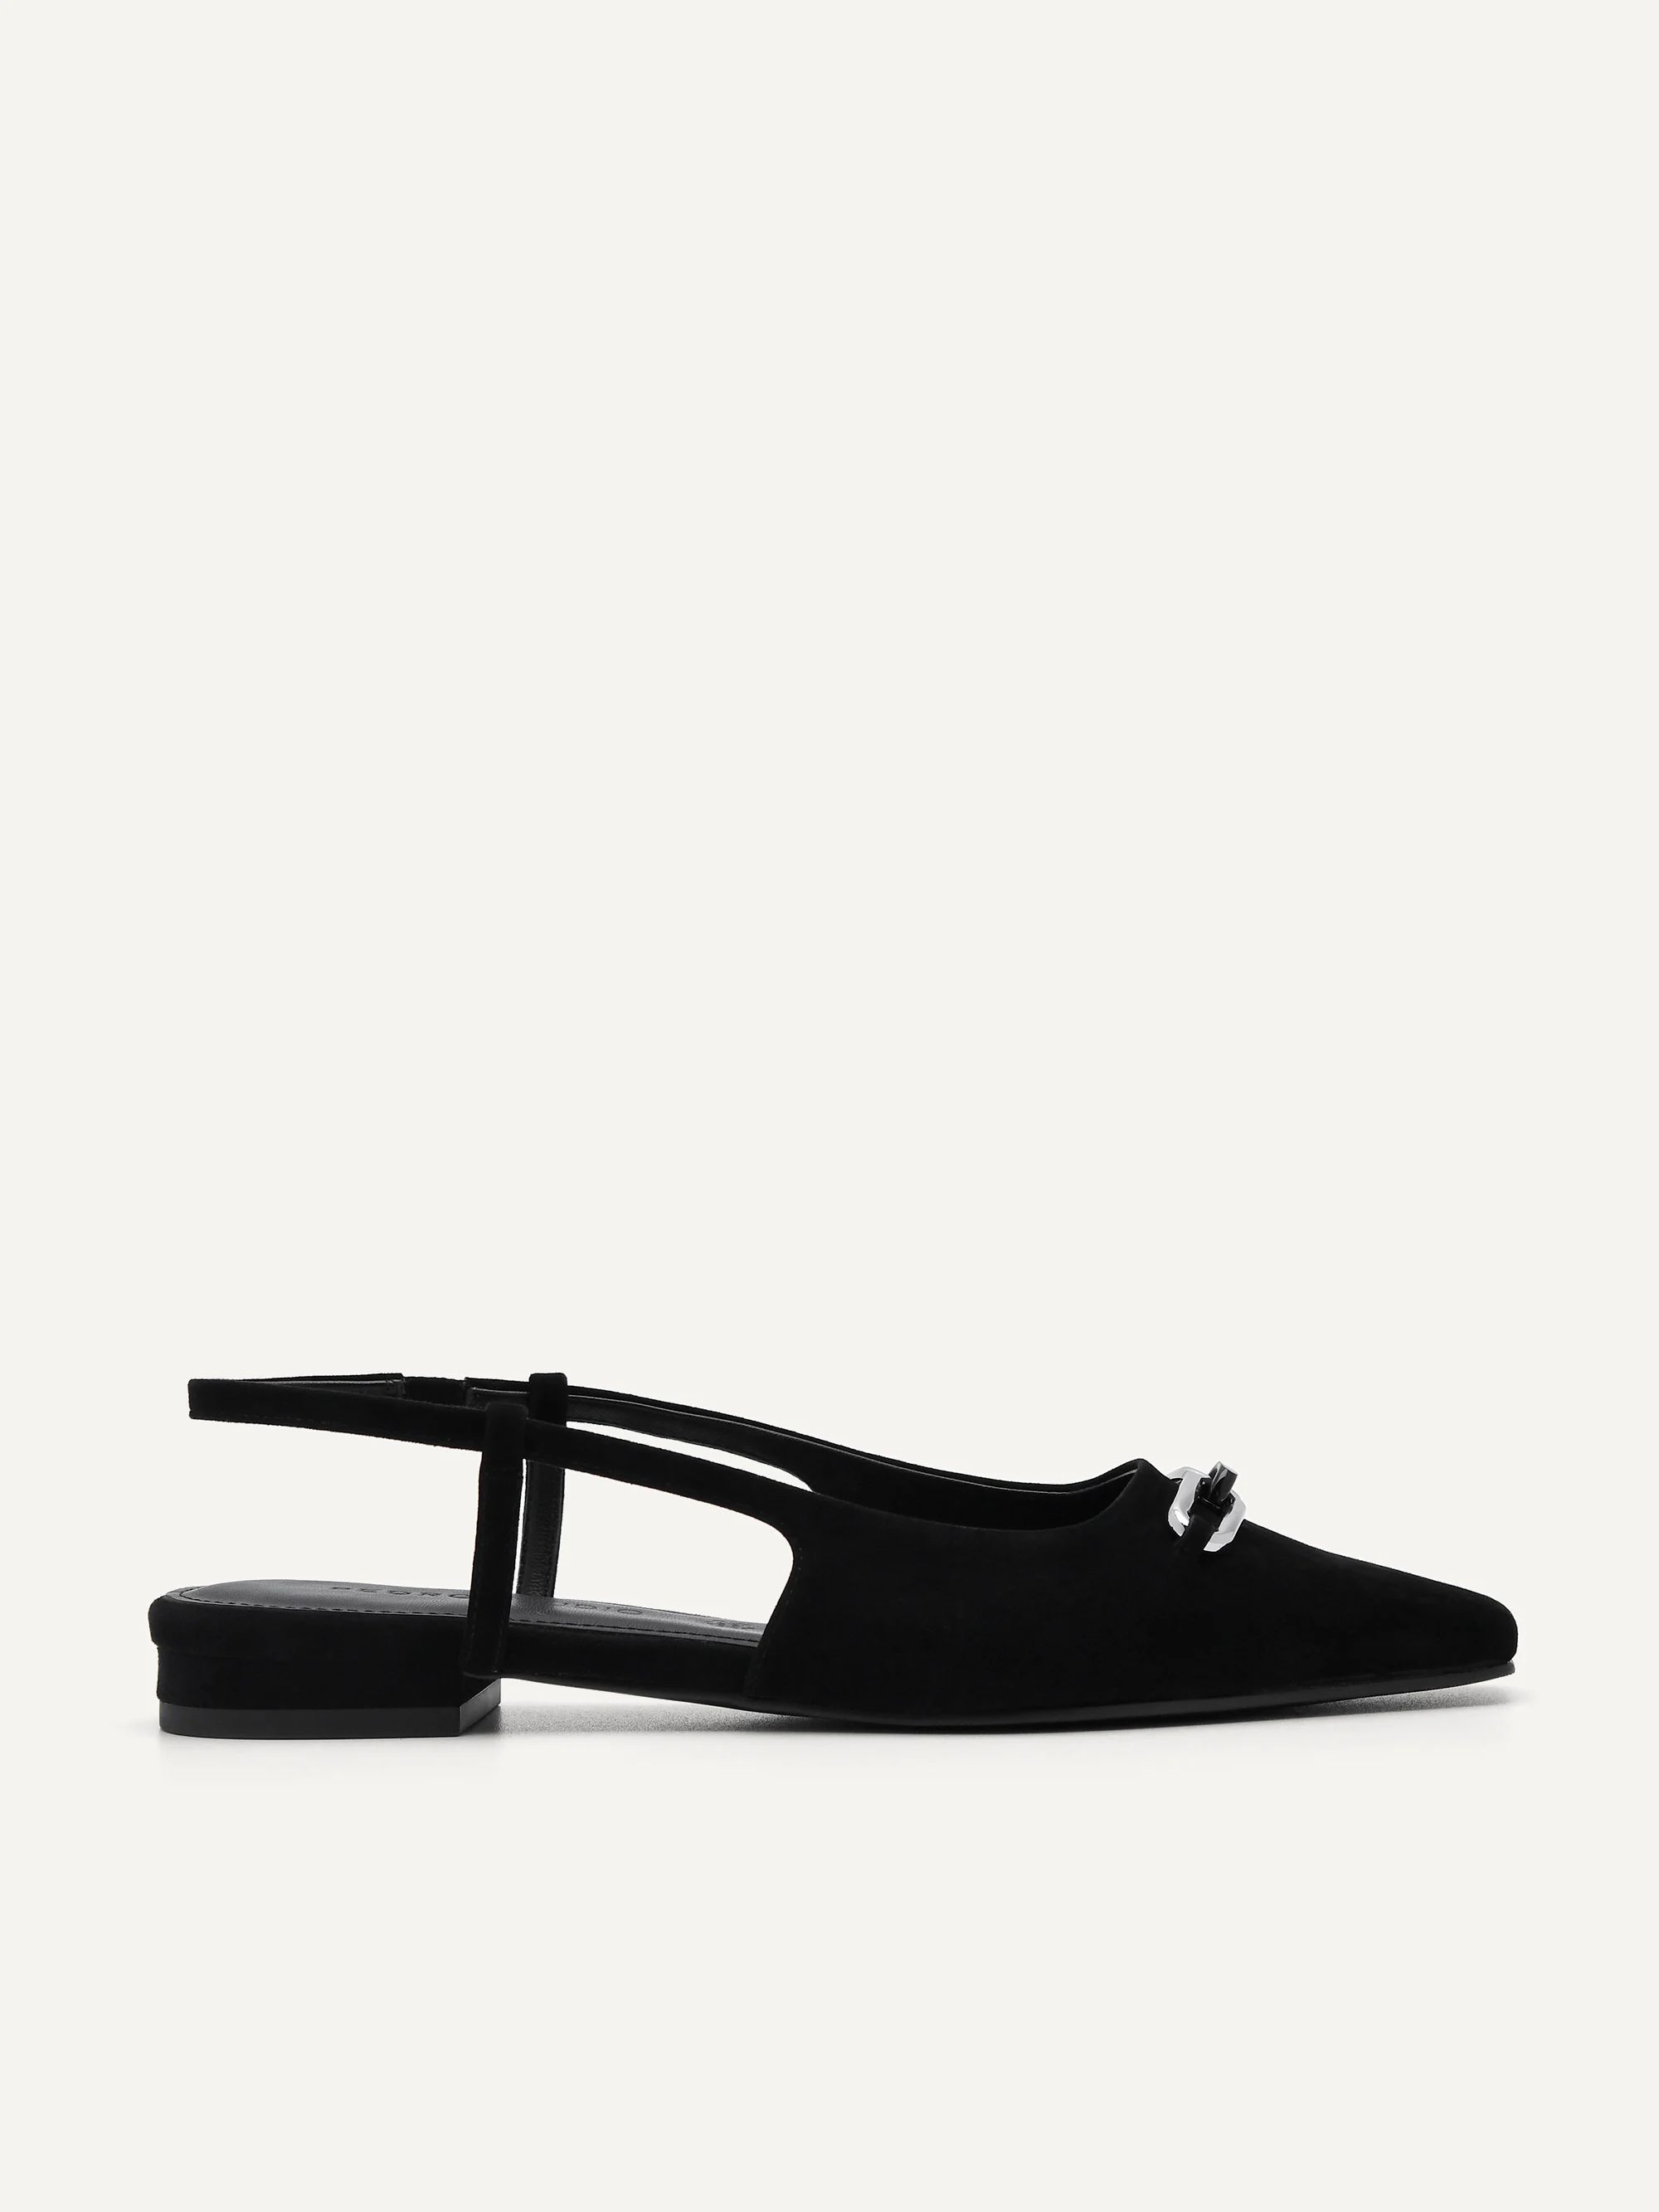 PEDRO Studio Kate Leather Ballerina Flats
-
Black | Pedro Shoes